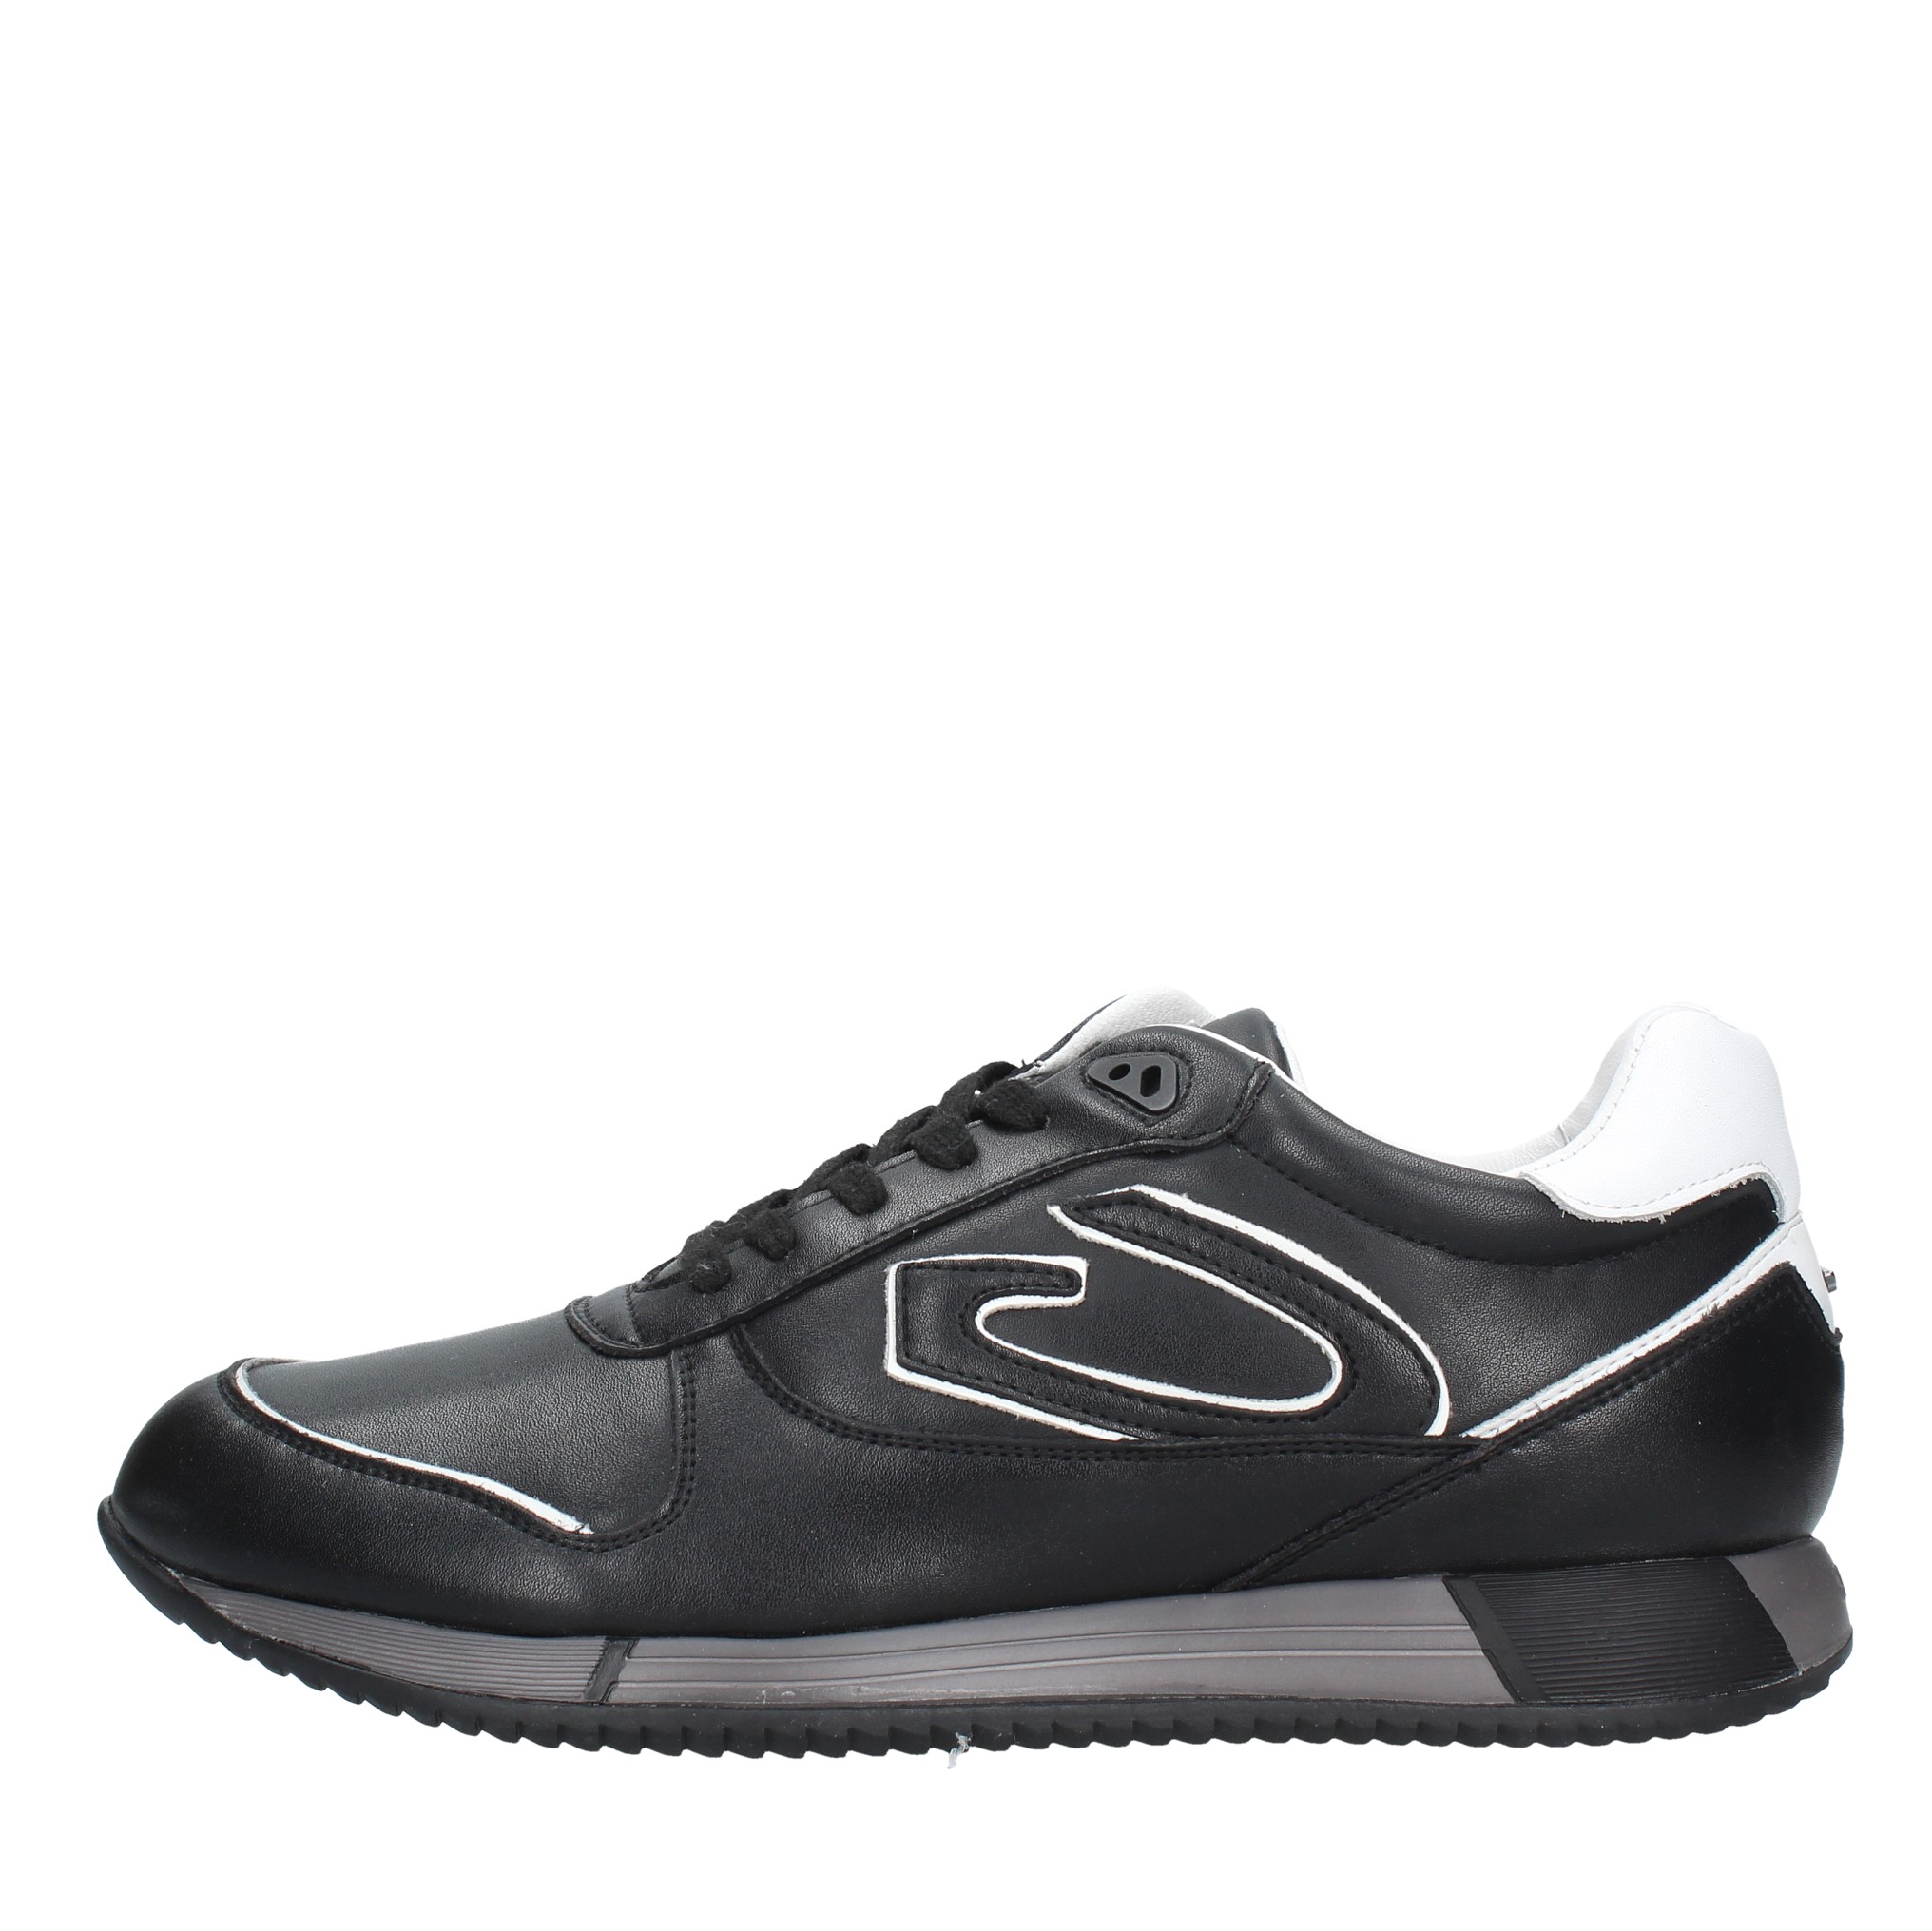 Trainers Black - GUARDIANI SPORT - Ginevra calzature